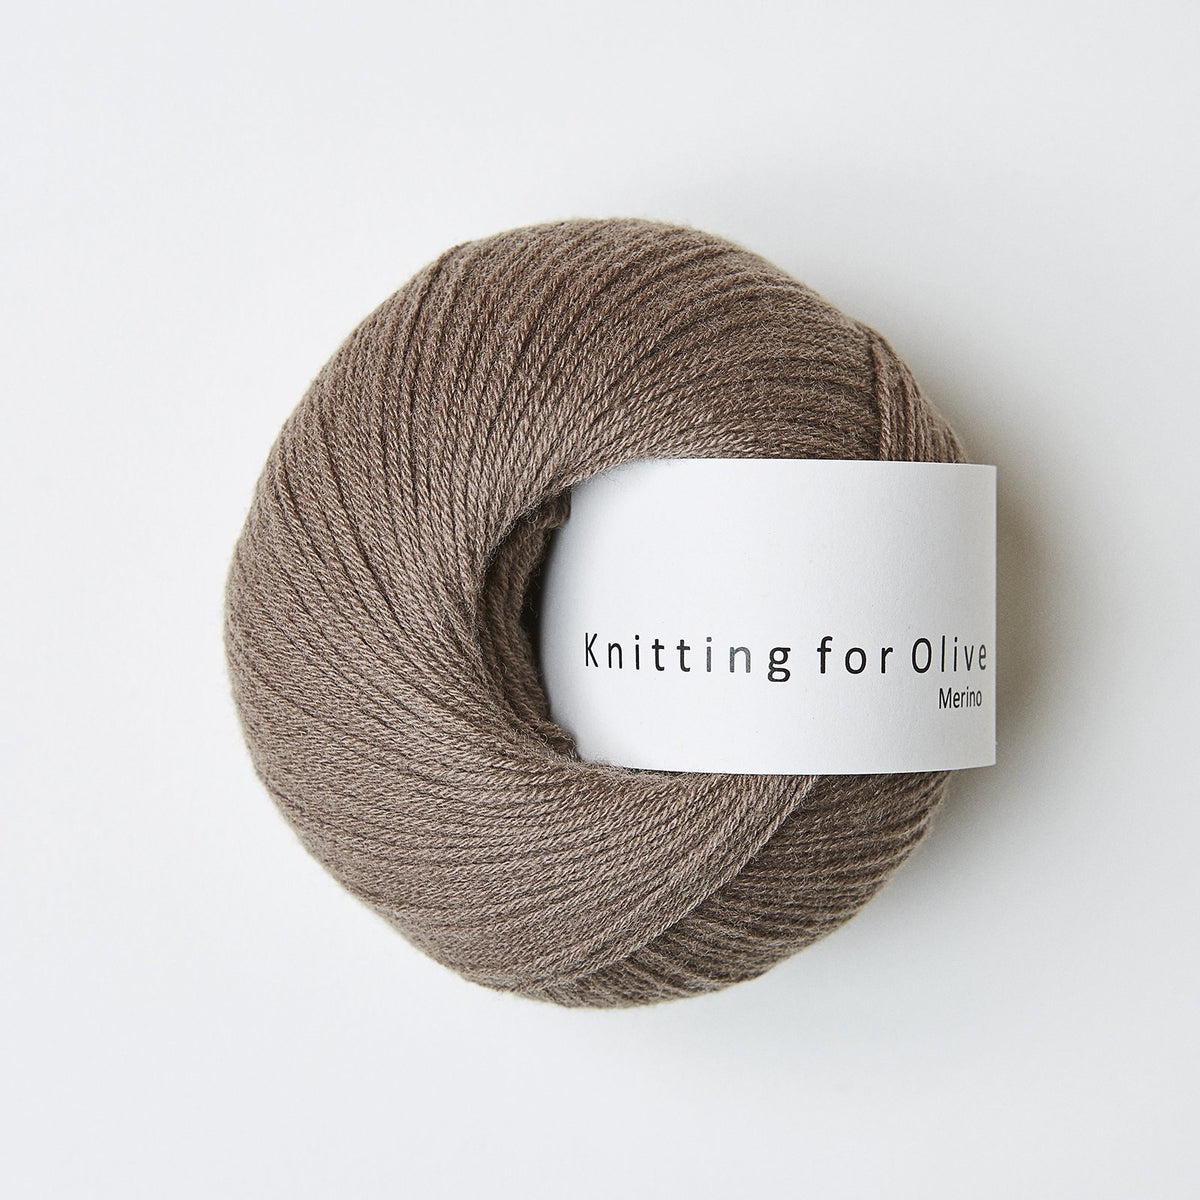 Knitting_for_olive_Merino_hasselnod_0503